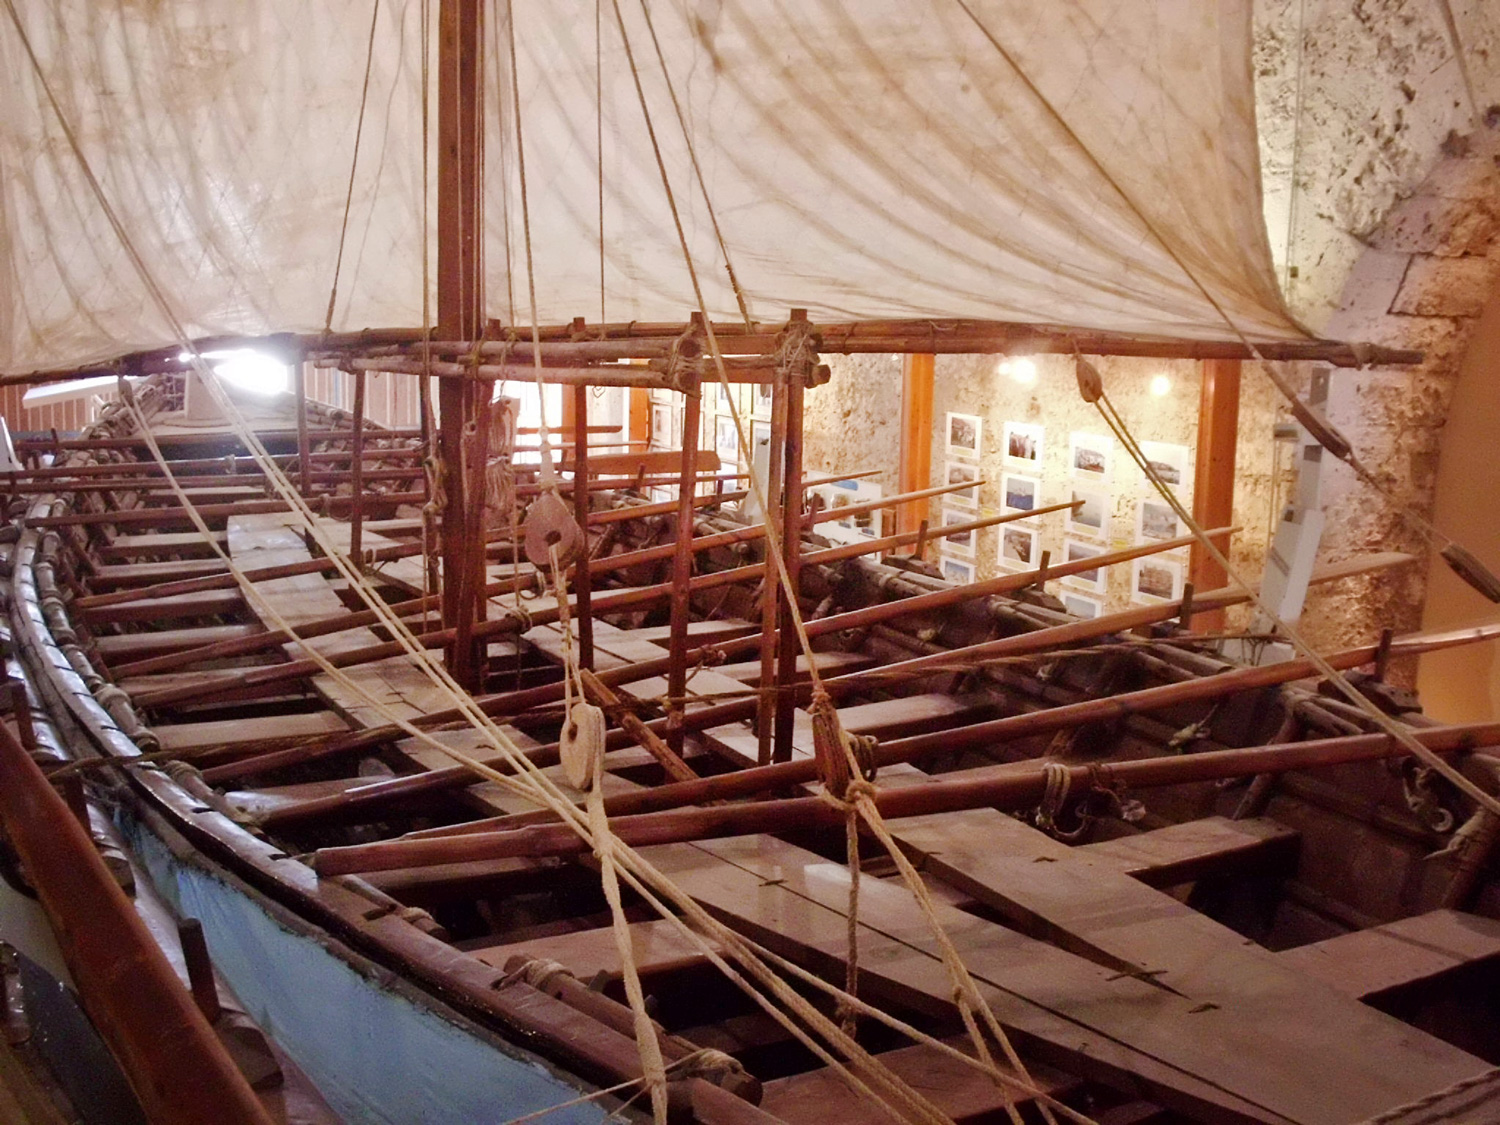 The Minoan Ship inside the storage room